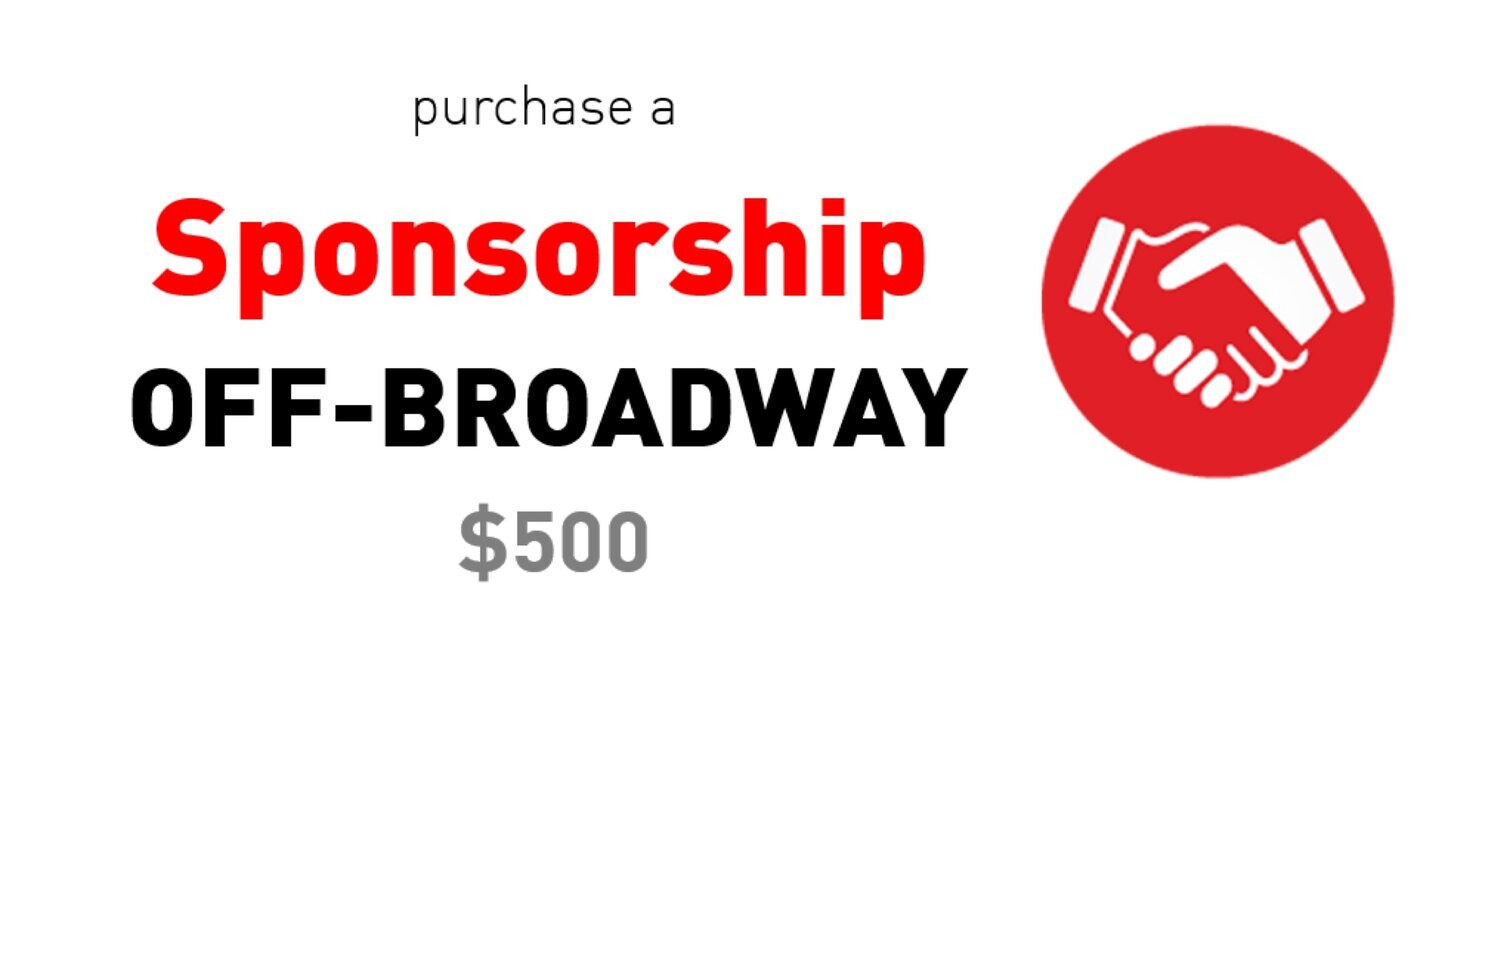 Sponsorship Level 3 - Off-Broadway